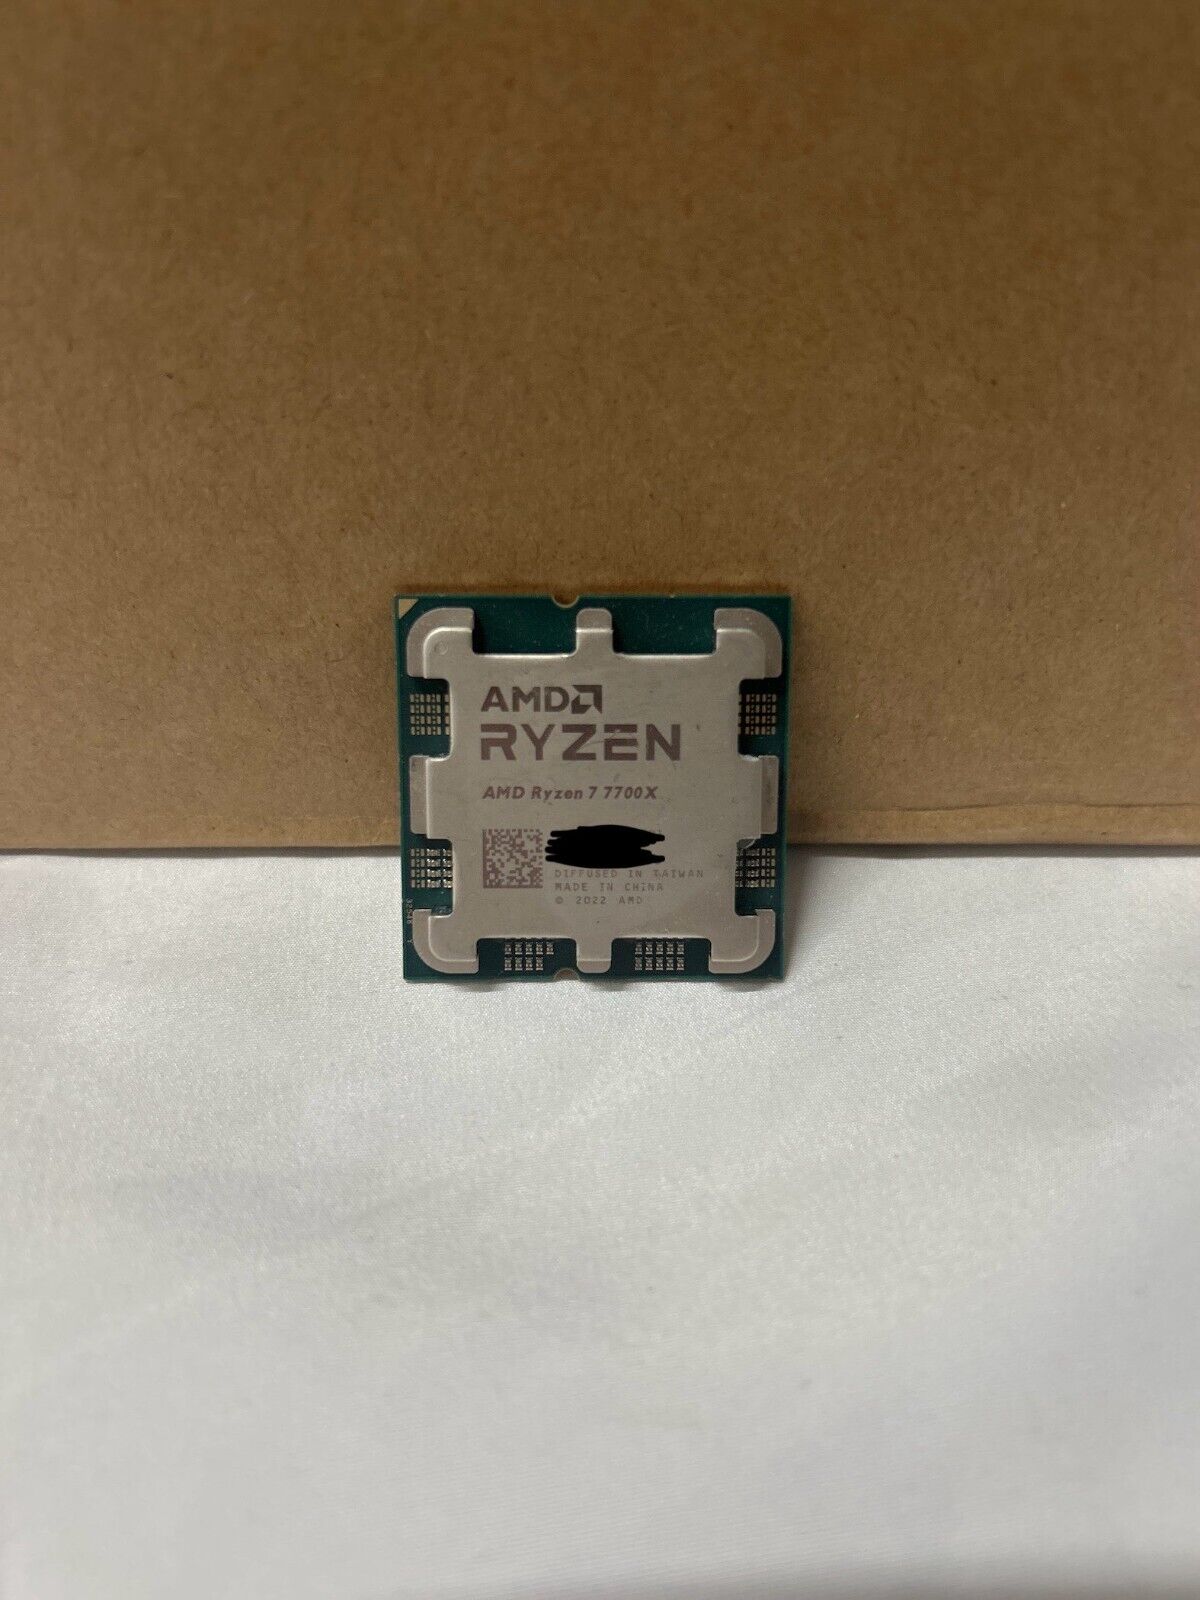 AMD Ryzen 7 7700x Processor (5.4 GHz, 8 Cores)